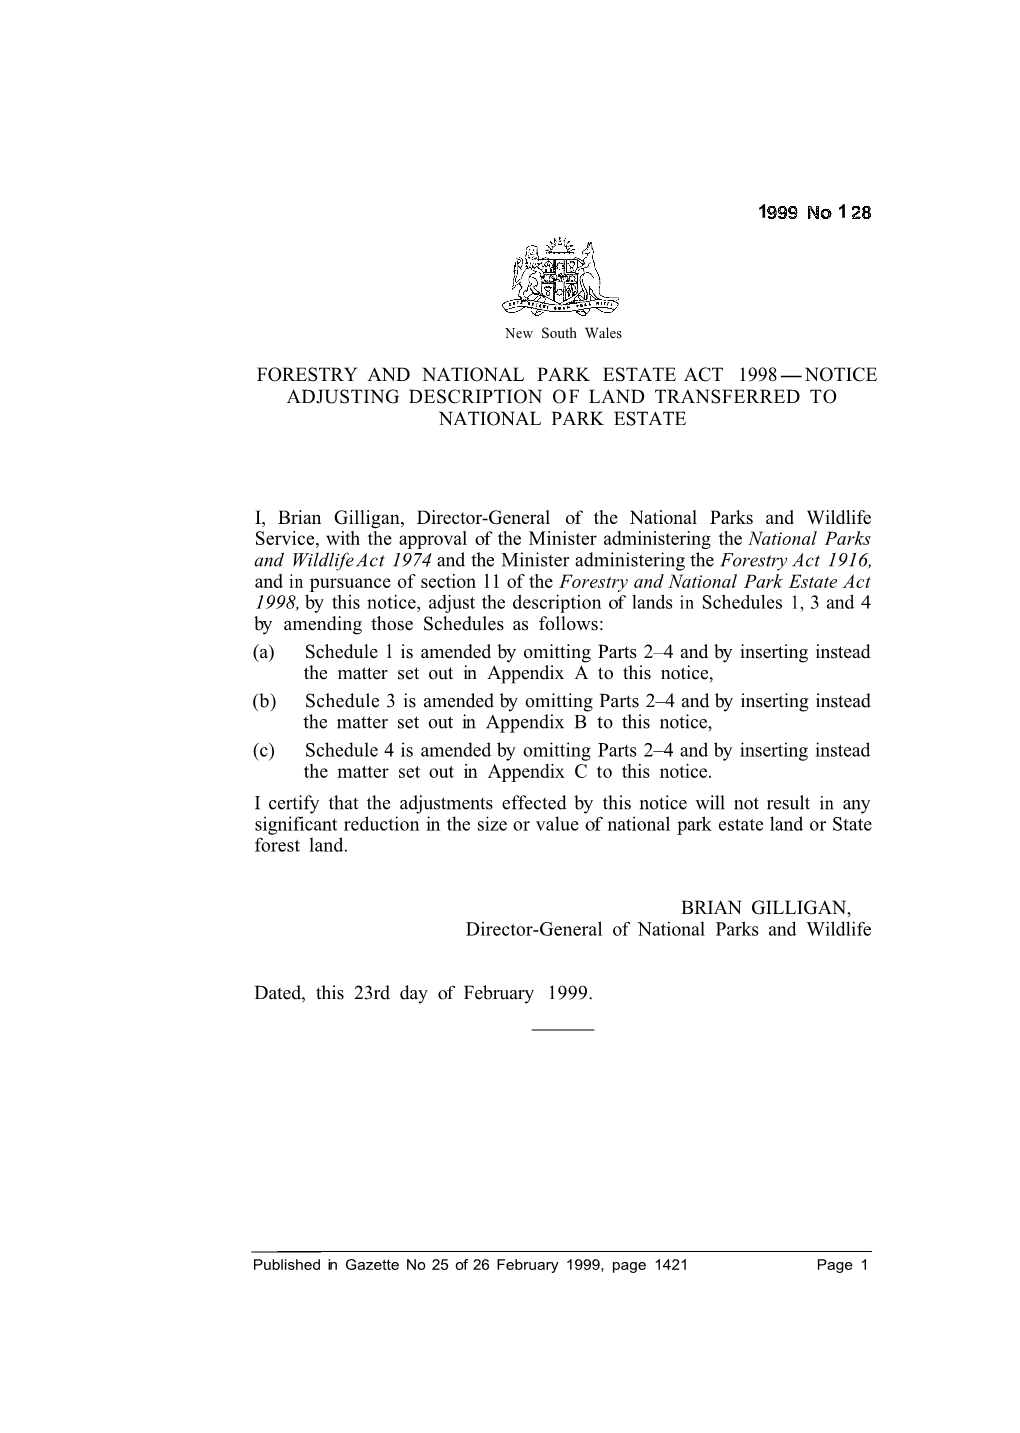 Forestry and National Park Estate Act 1998-Notice Adjusting Description of Land Transferred to National Park Estate